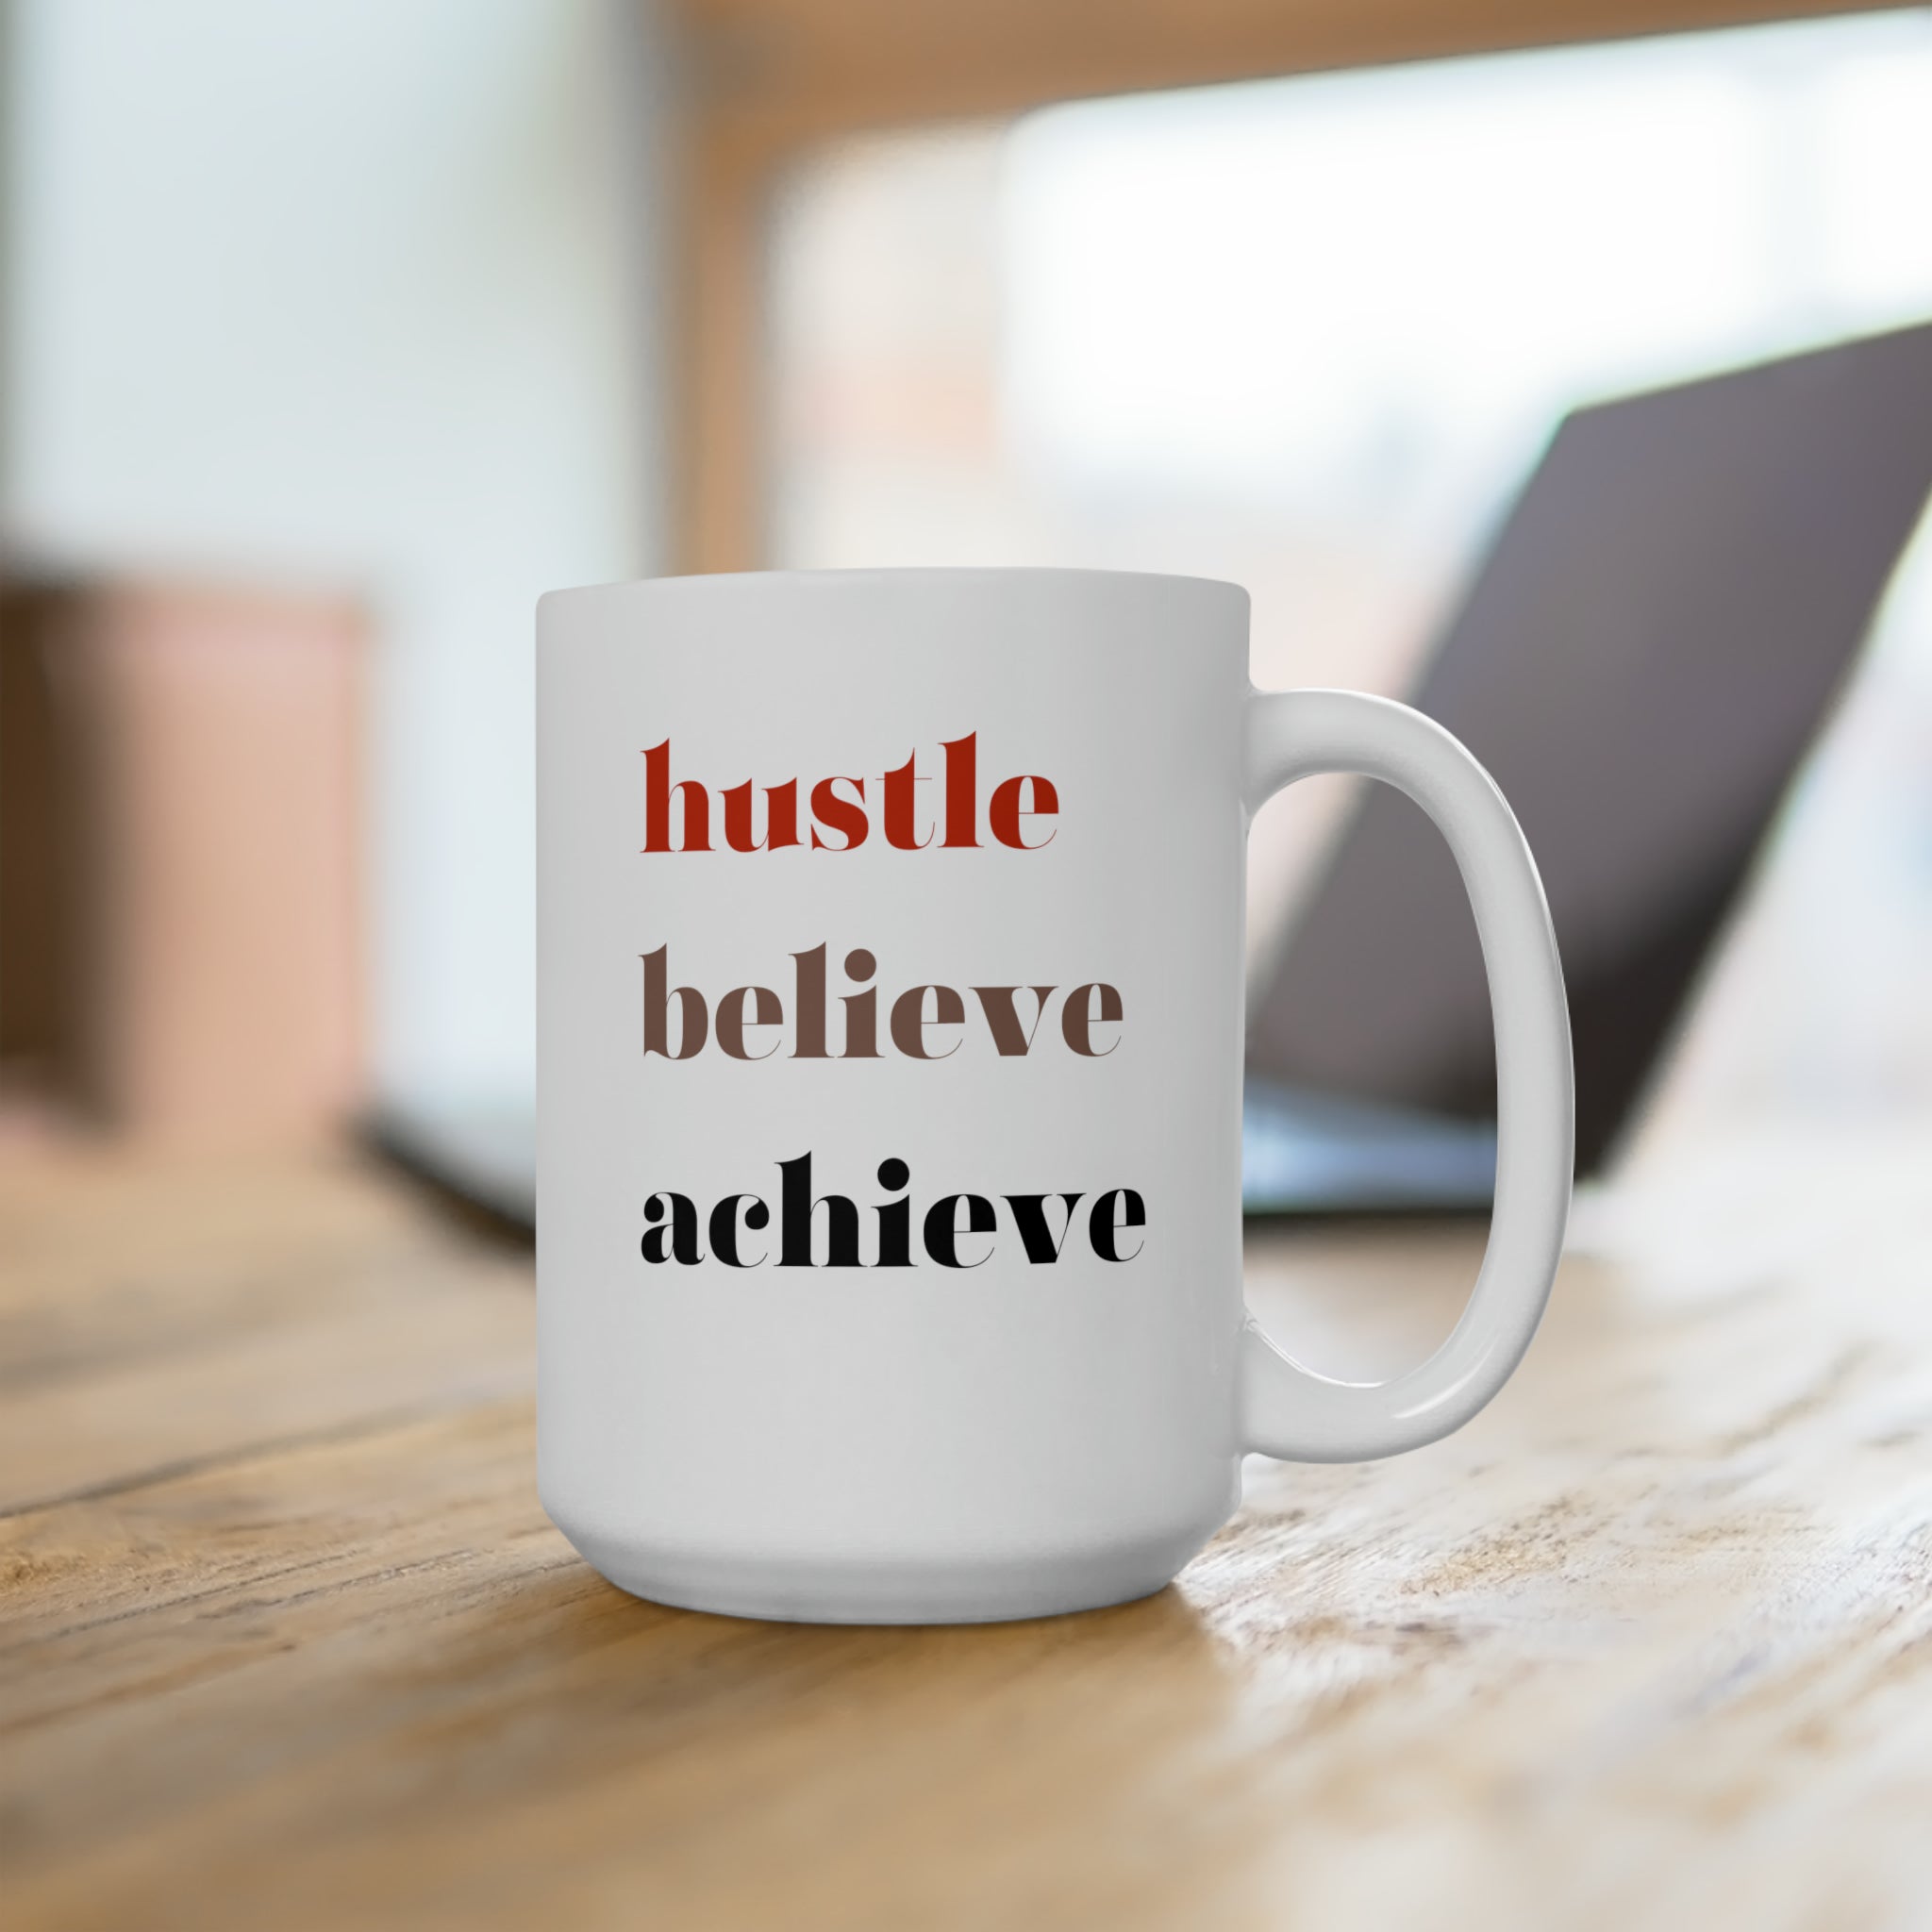 hustle believe achieve aspirational mug from Lindsay Albanese